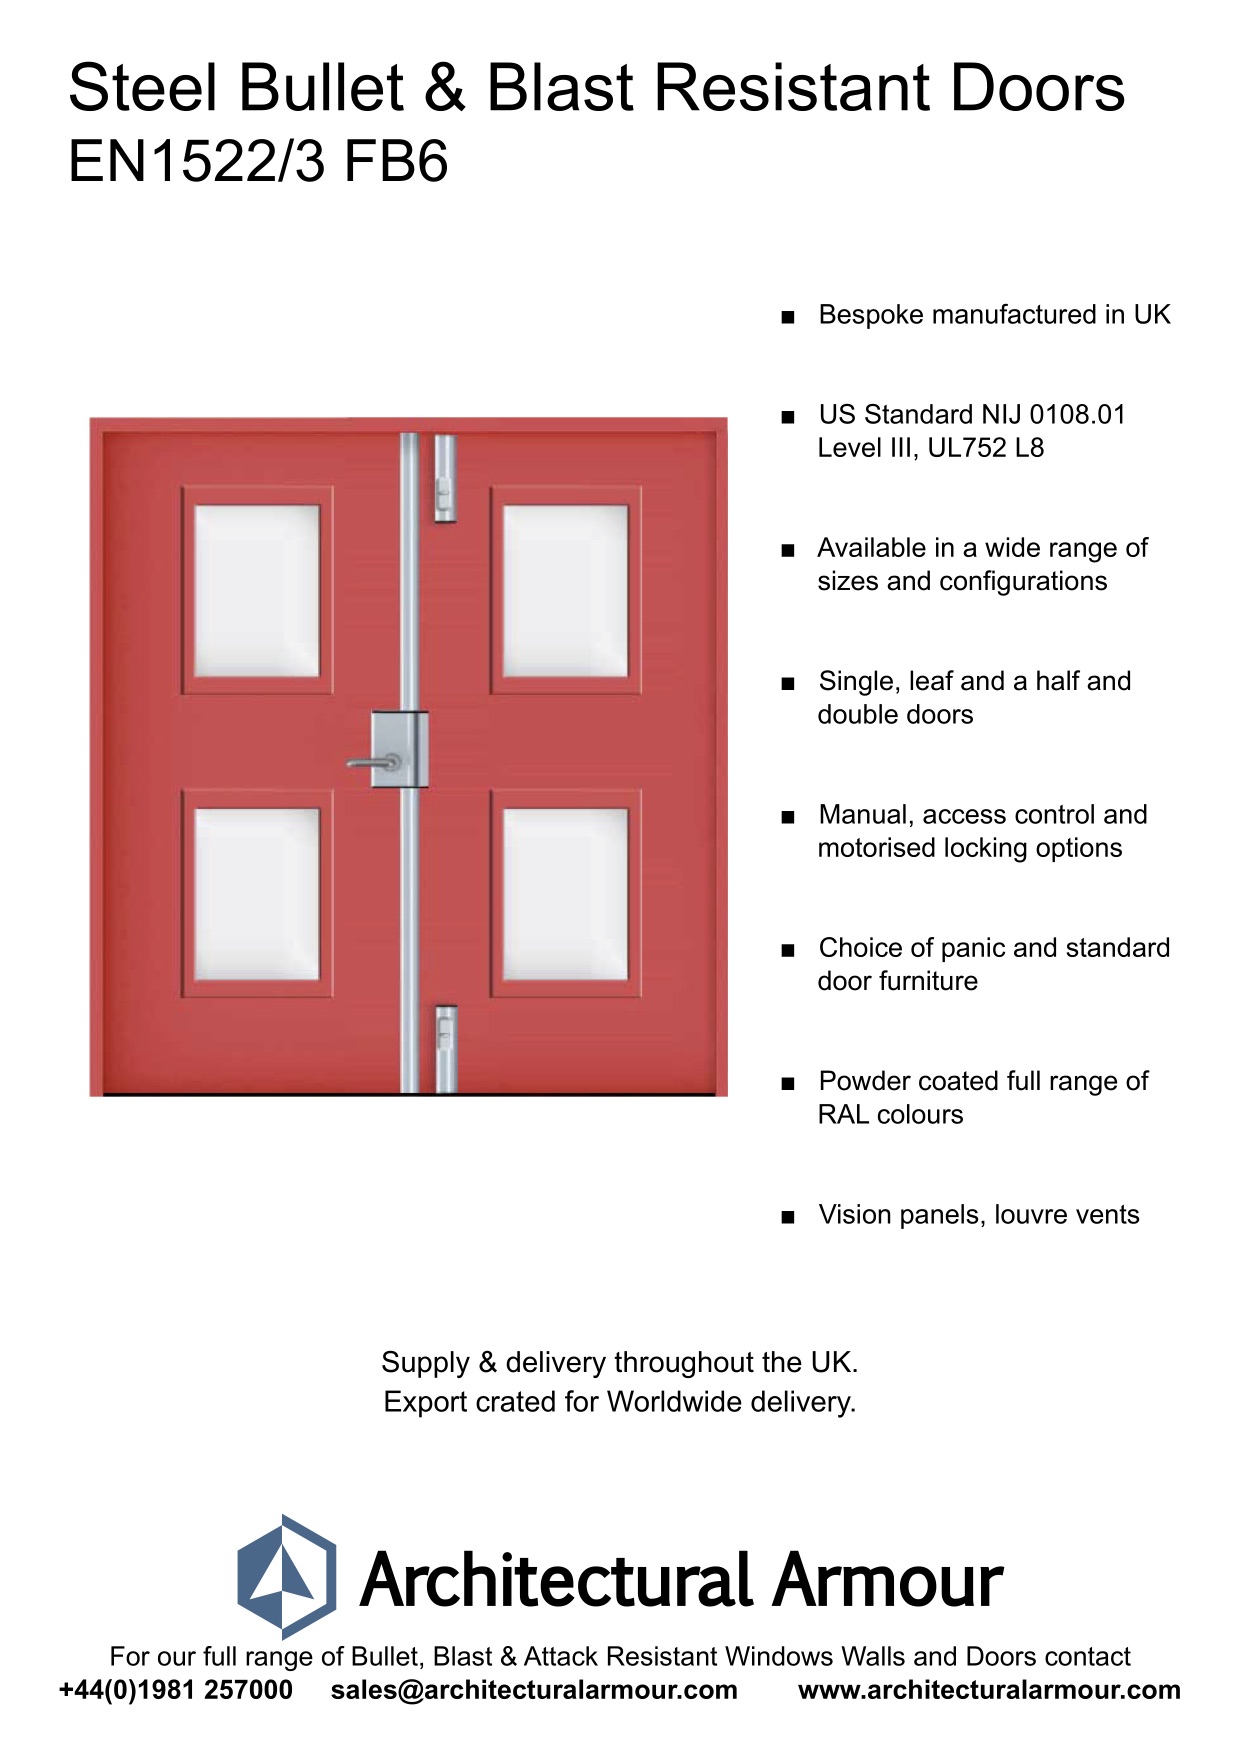 Blast-and-Ballistic-Resistant-Steel-Doors-Vision-Panels-EN1522-3-FB6-BR6